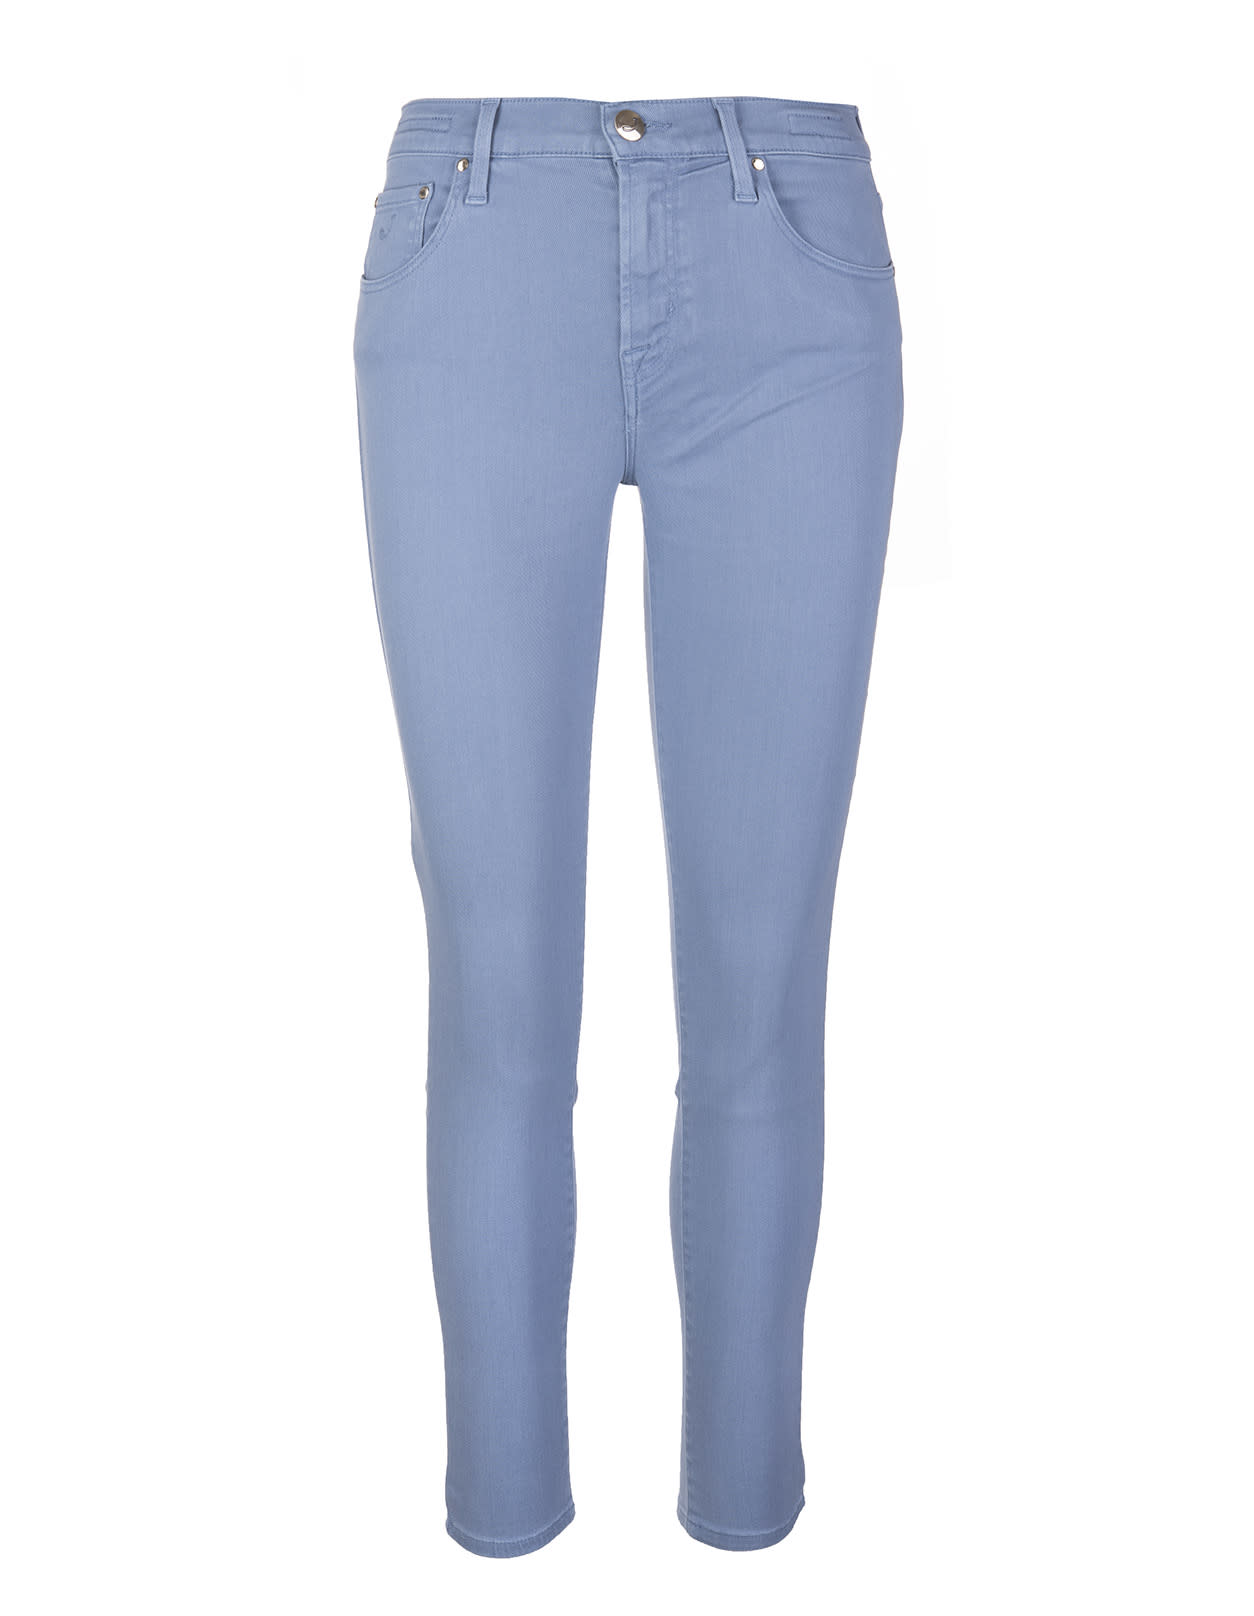 Jacob Cohen Woman Light Blue Kimberly Crop Skinny Jeans